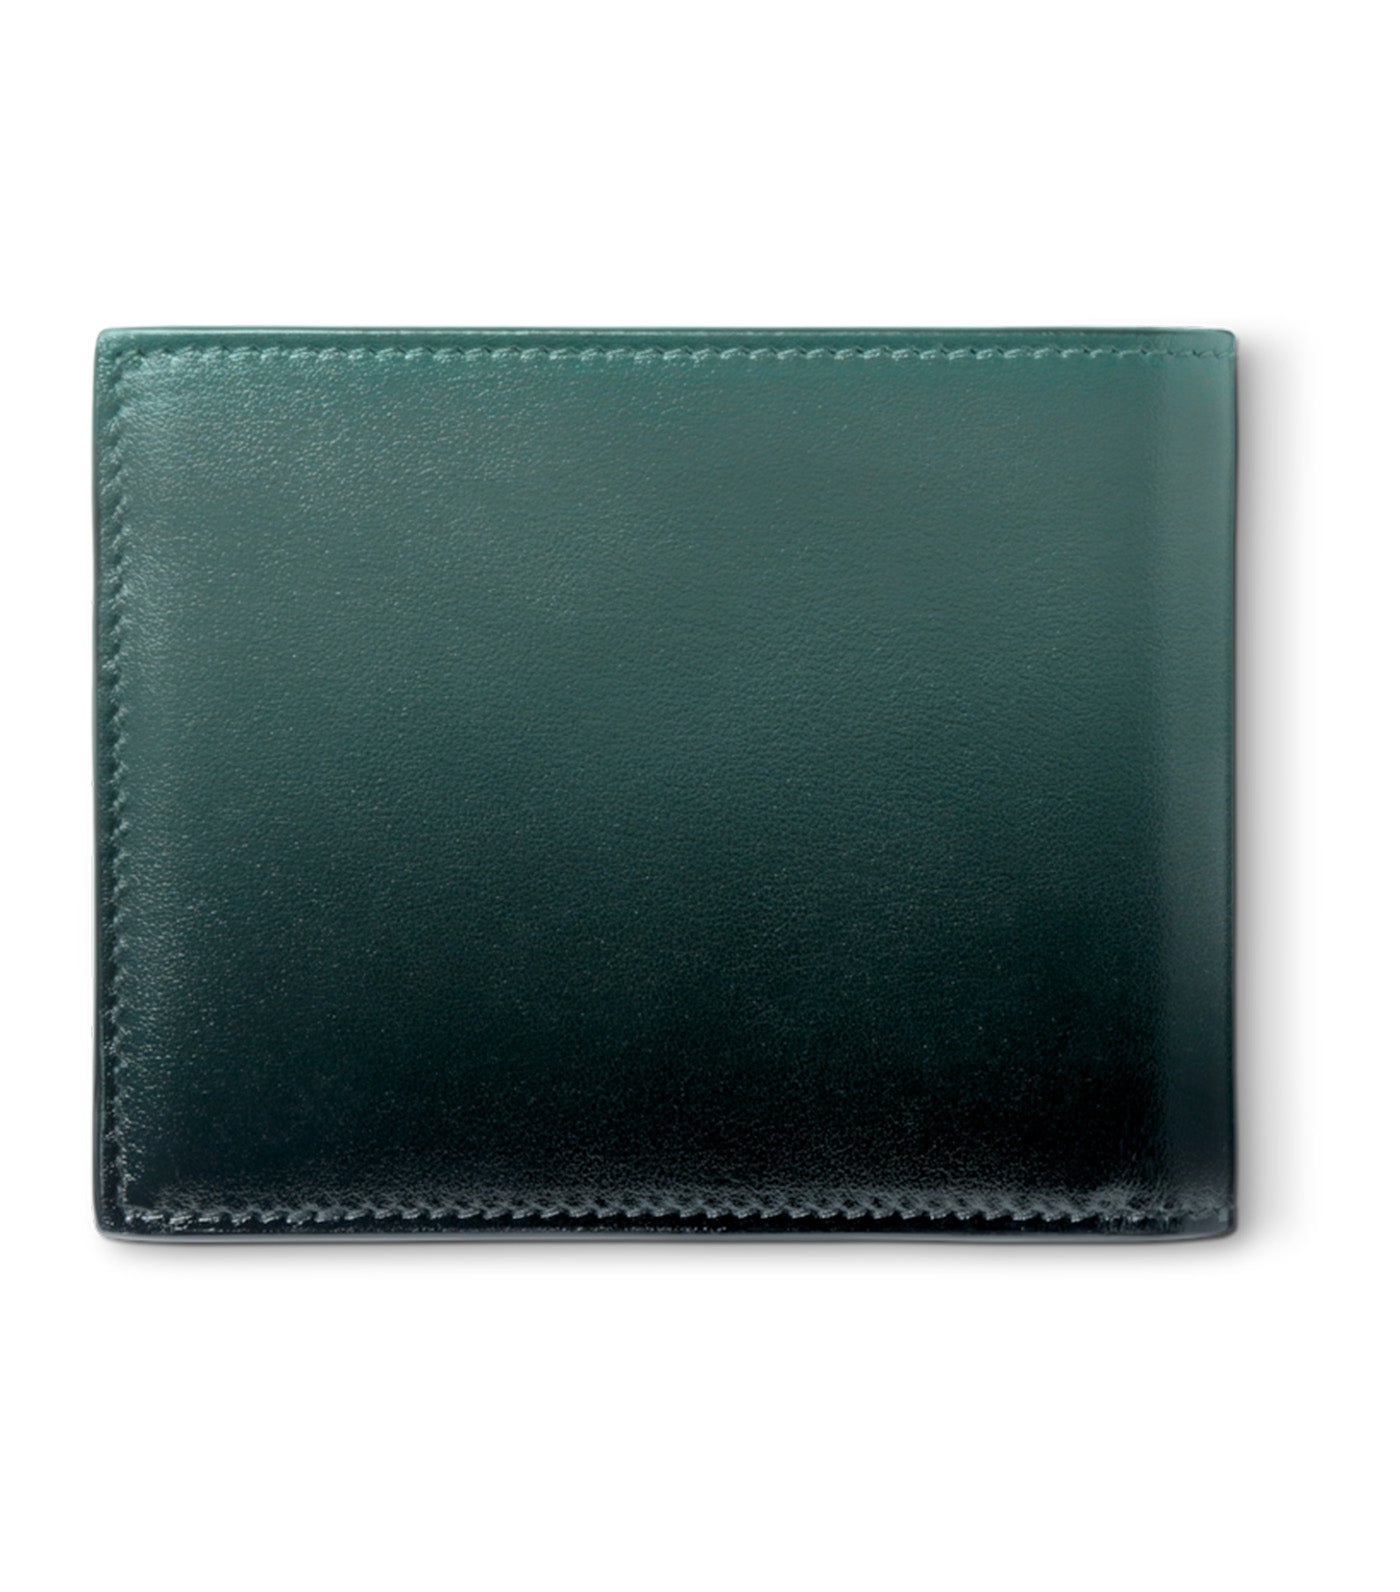 Meisterstück Wallet 6cc Green